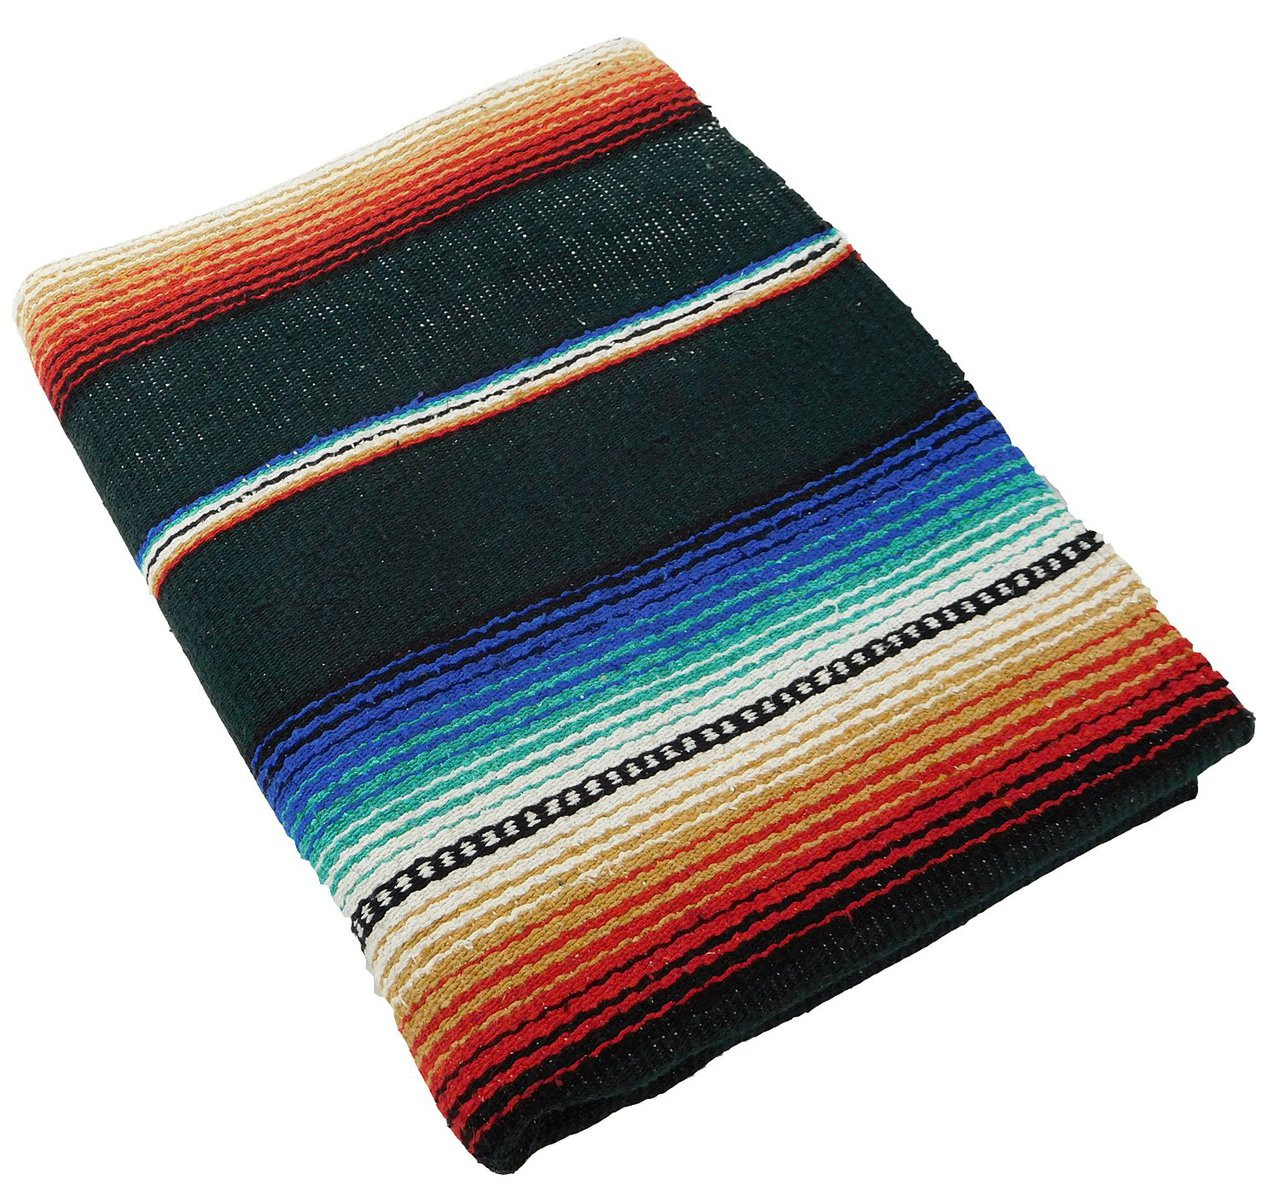 Sarape Cotton Heavy Weave 58 x 78 Striped Tan Yoga Roll Blanket